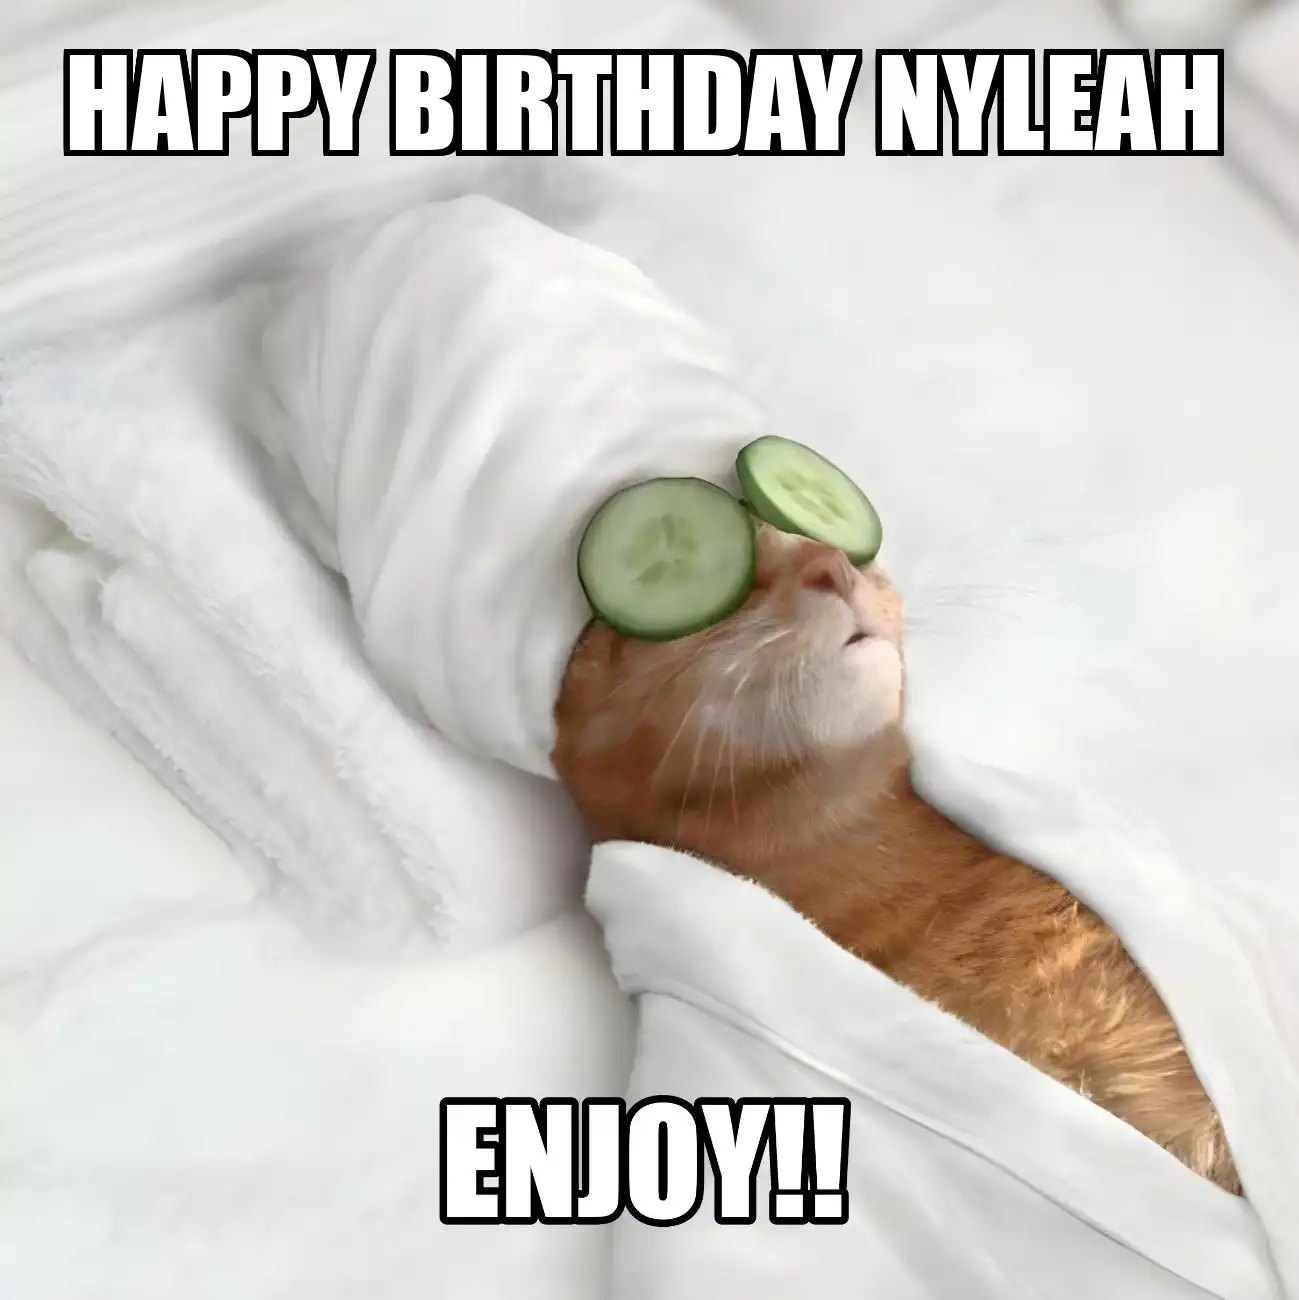 Happy Birthday Nyleah Enjoy Cat Meme